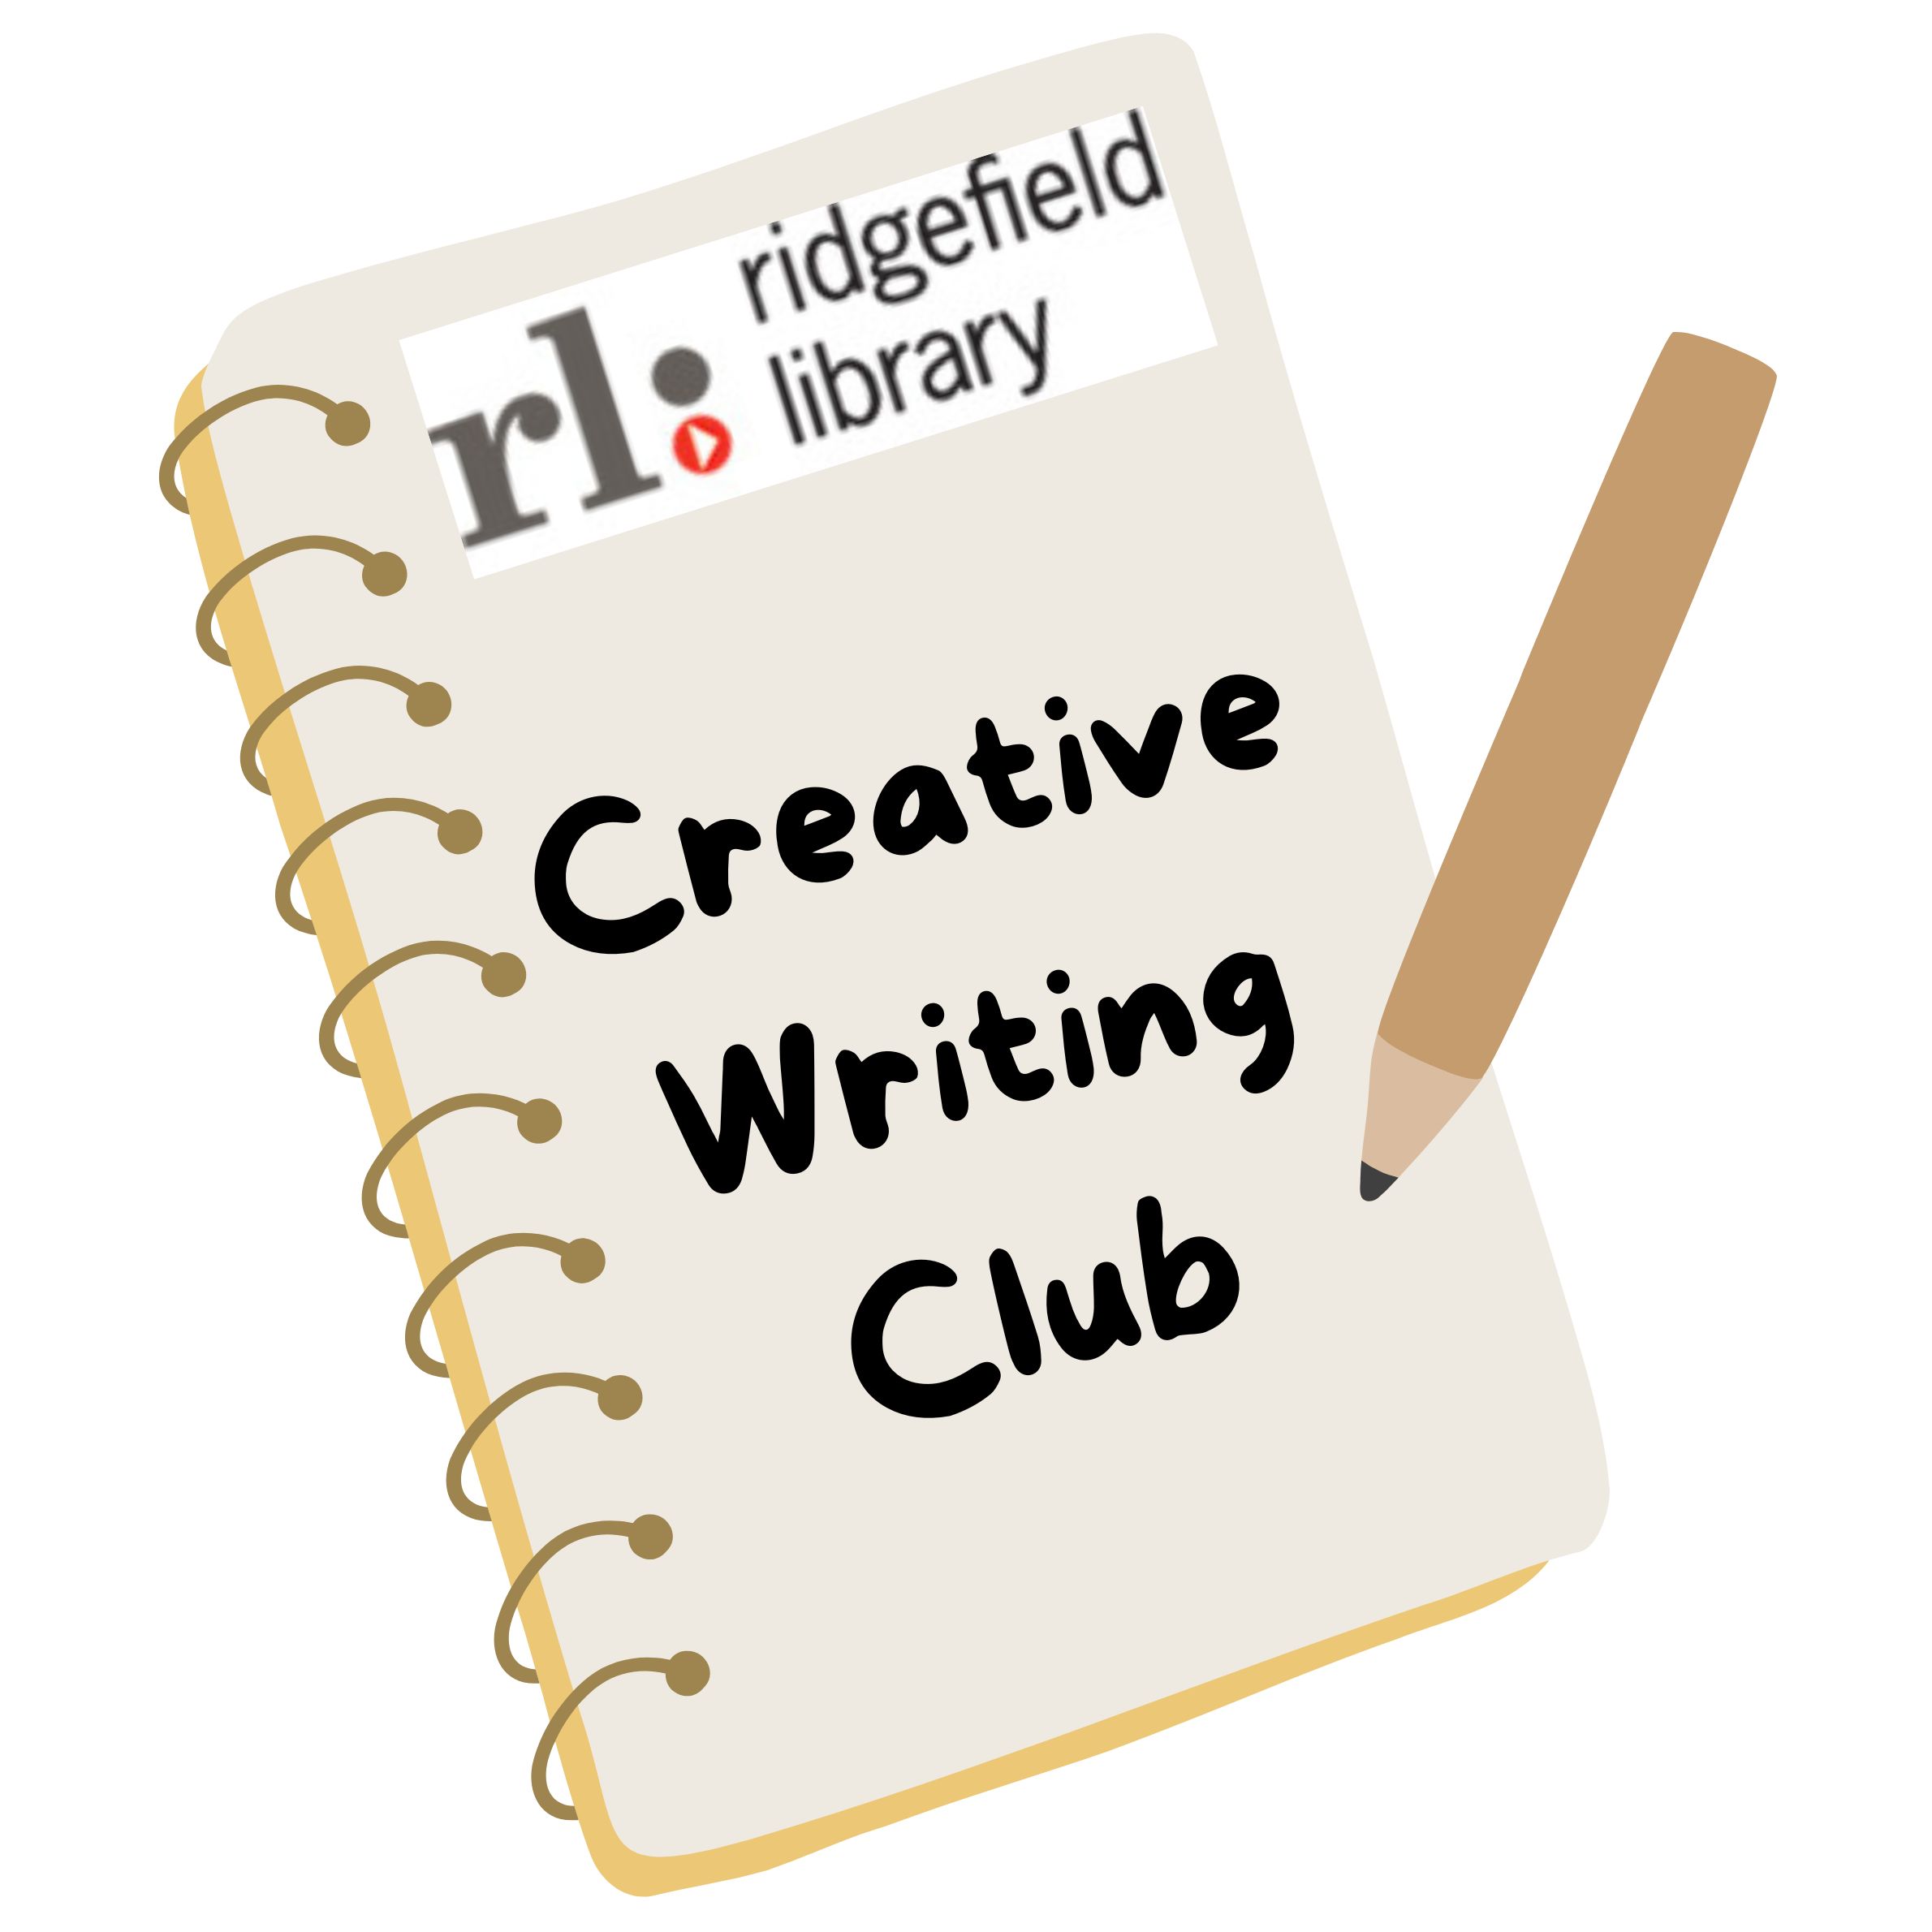 description of club creative writing